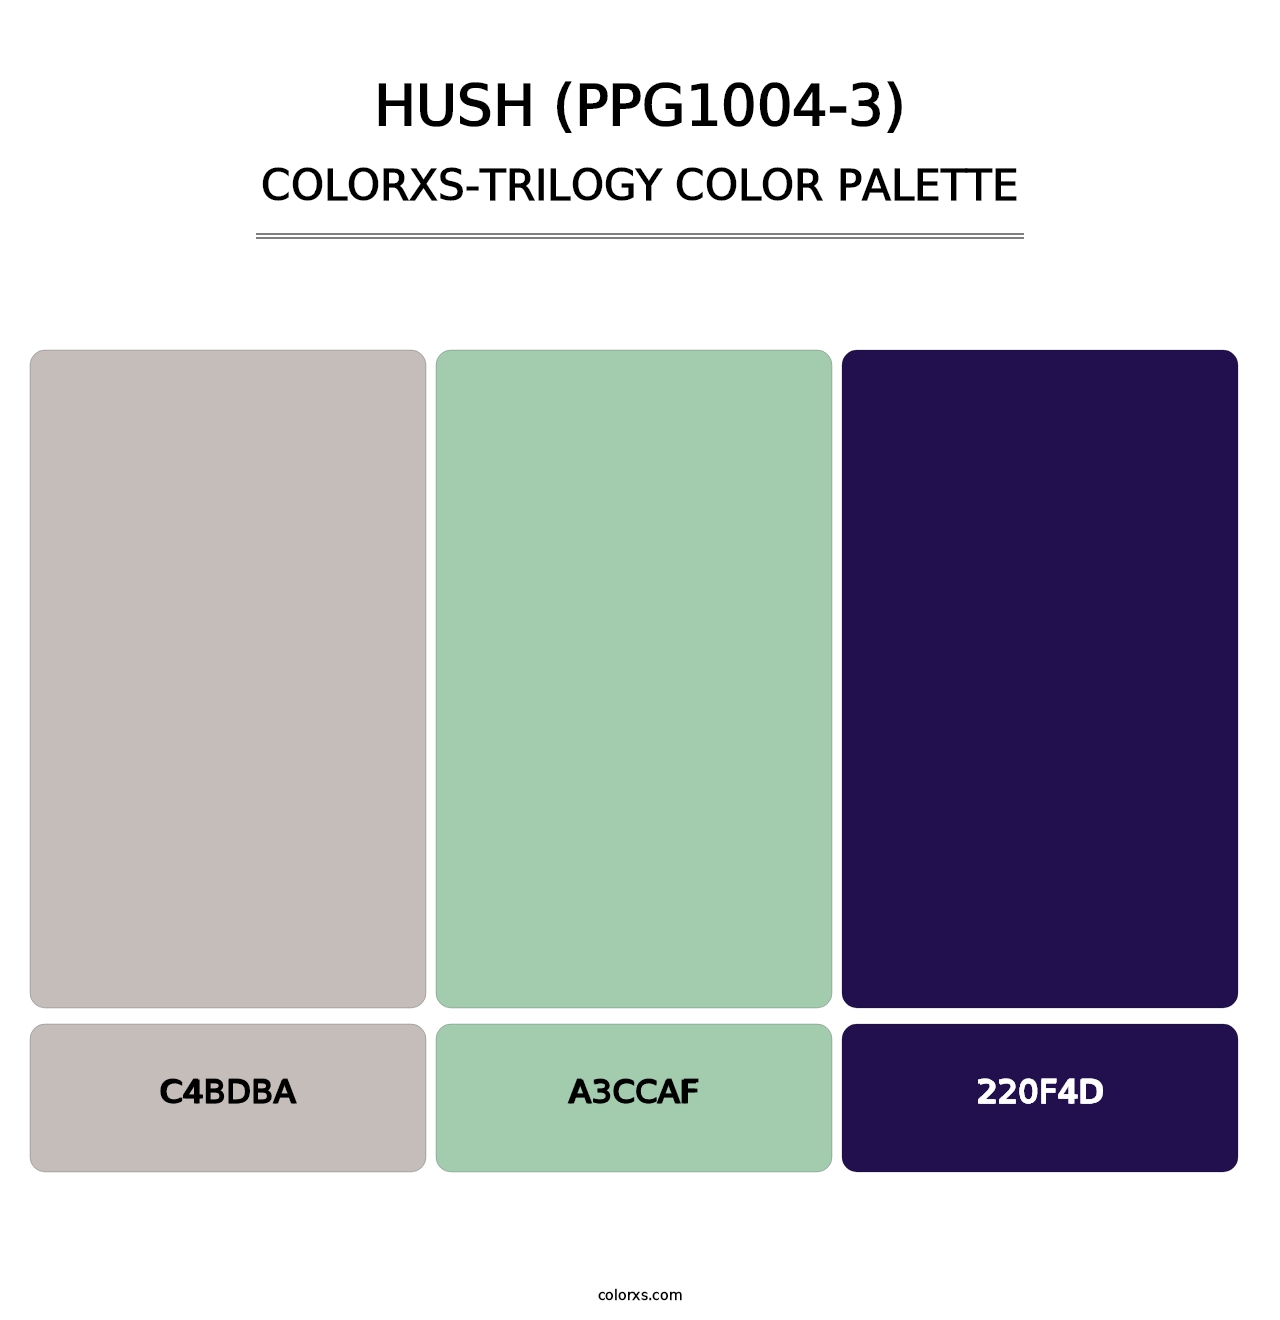 Hush (PPG1004-3) - Colorxs Trilogy Palette